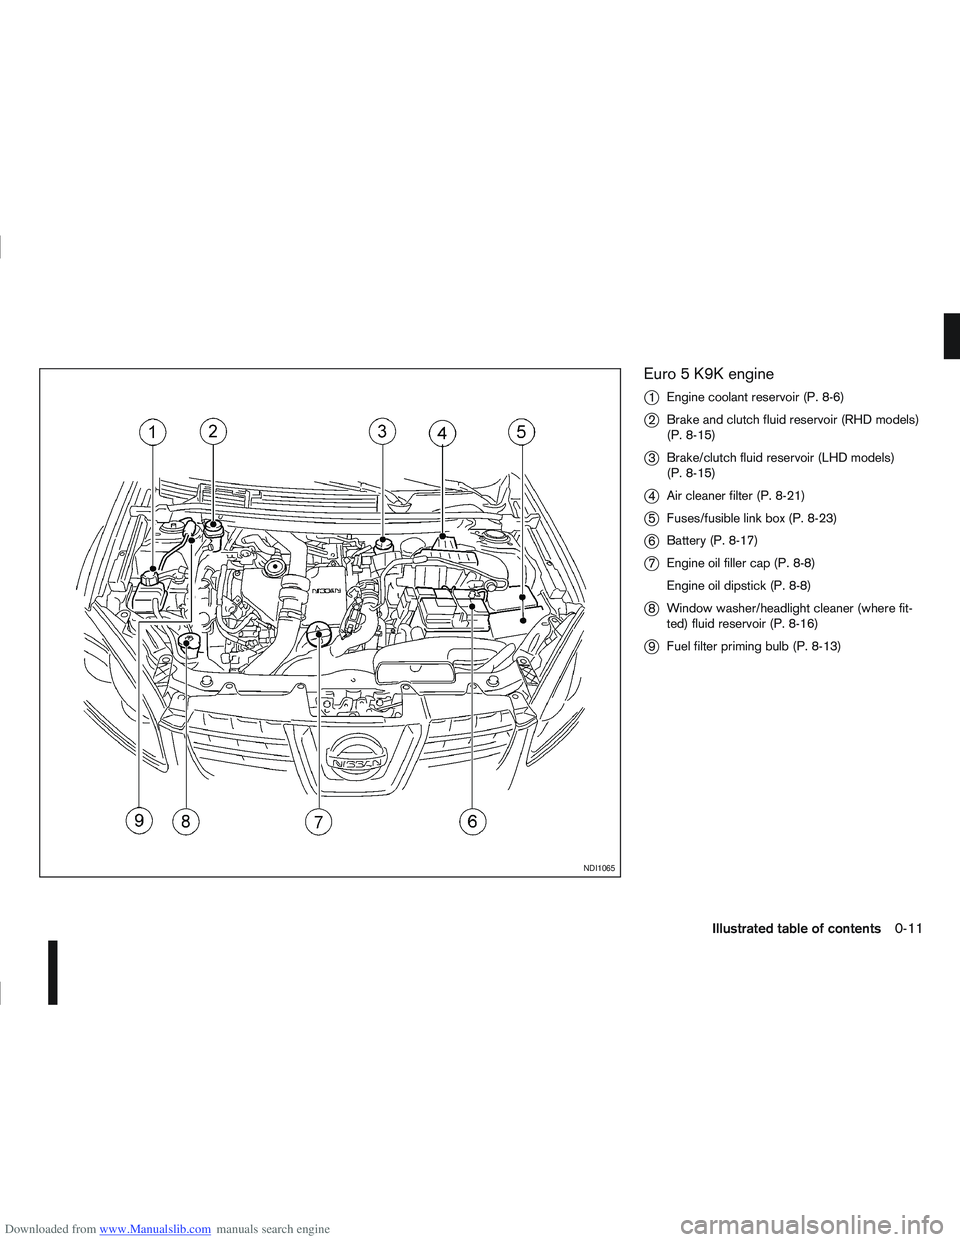 NISSAN QASHQAI 2013 User Guide Downloaded from www.Manualslib.com manuals search engine Euro 5 K9K engine
j
1Engine coolant reservoir (P. 8-6)
j2Brake and clutch fluid reservoir (RHD models)
(P. 8-15)
j3Brake/clutch fluid reservoir